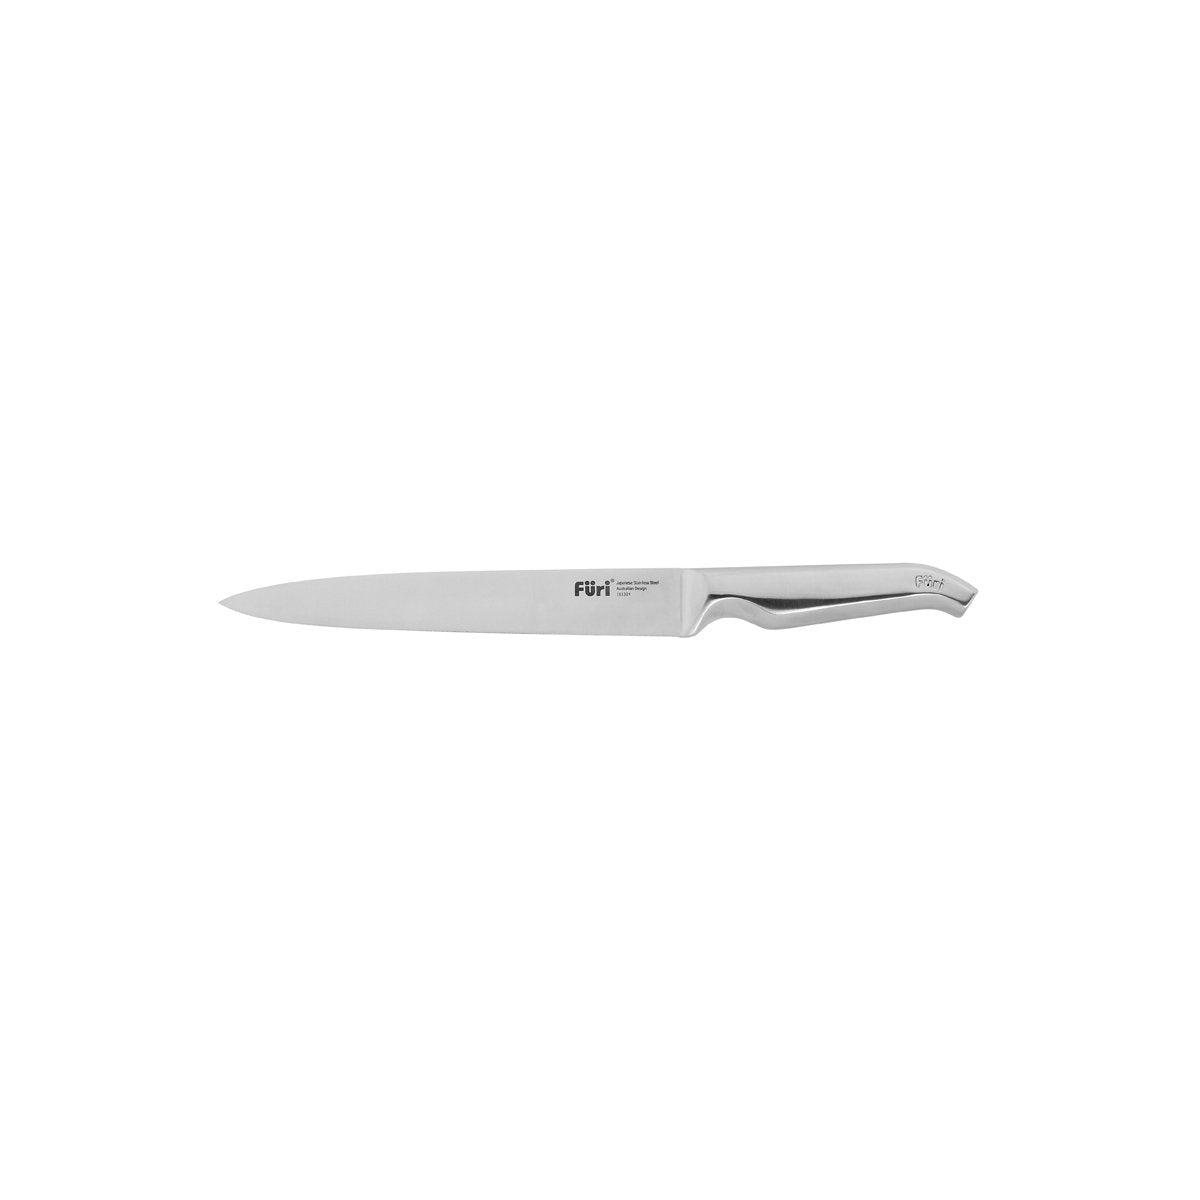 27193 Furi Pro Carving Knife 200mm Tomkin Australia Hospitality Supplies